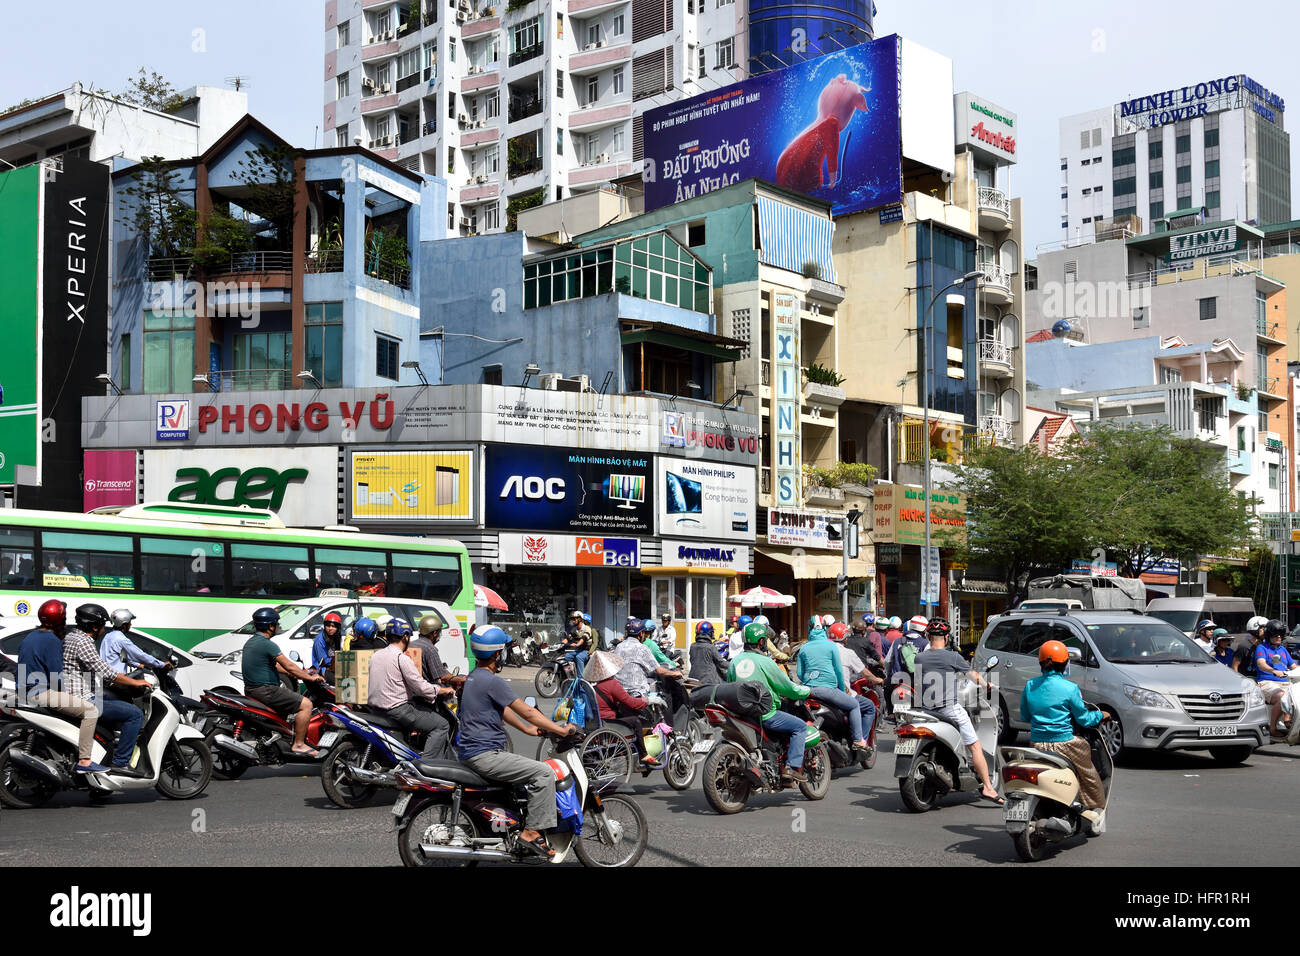 Rush hour commuters car taxis scooters motorcycles Pham Viet Chanh street - Nga Sau Cong Hoa  Ho Chi Minh City (Saigon) Vietnam Stock Photo